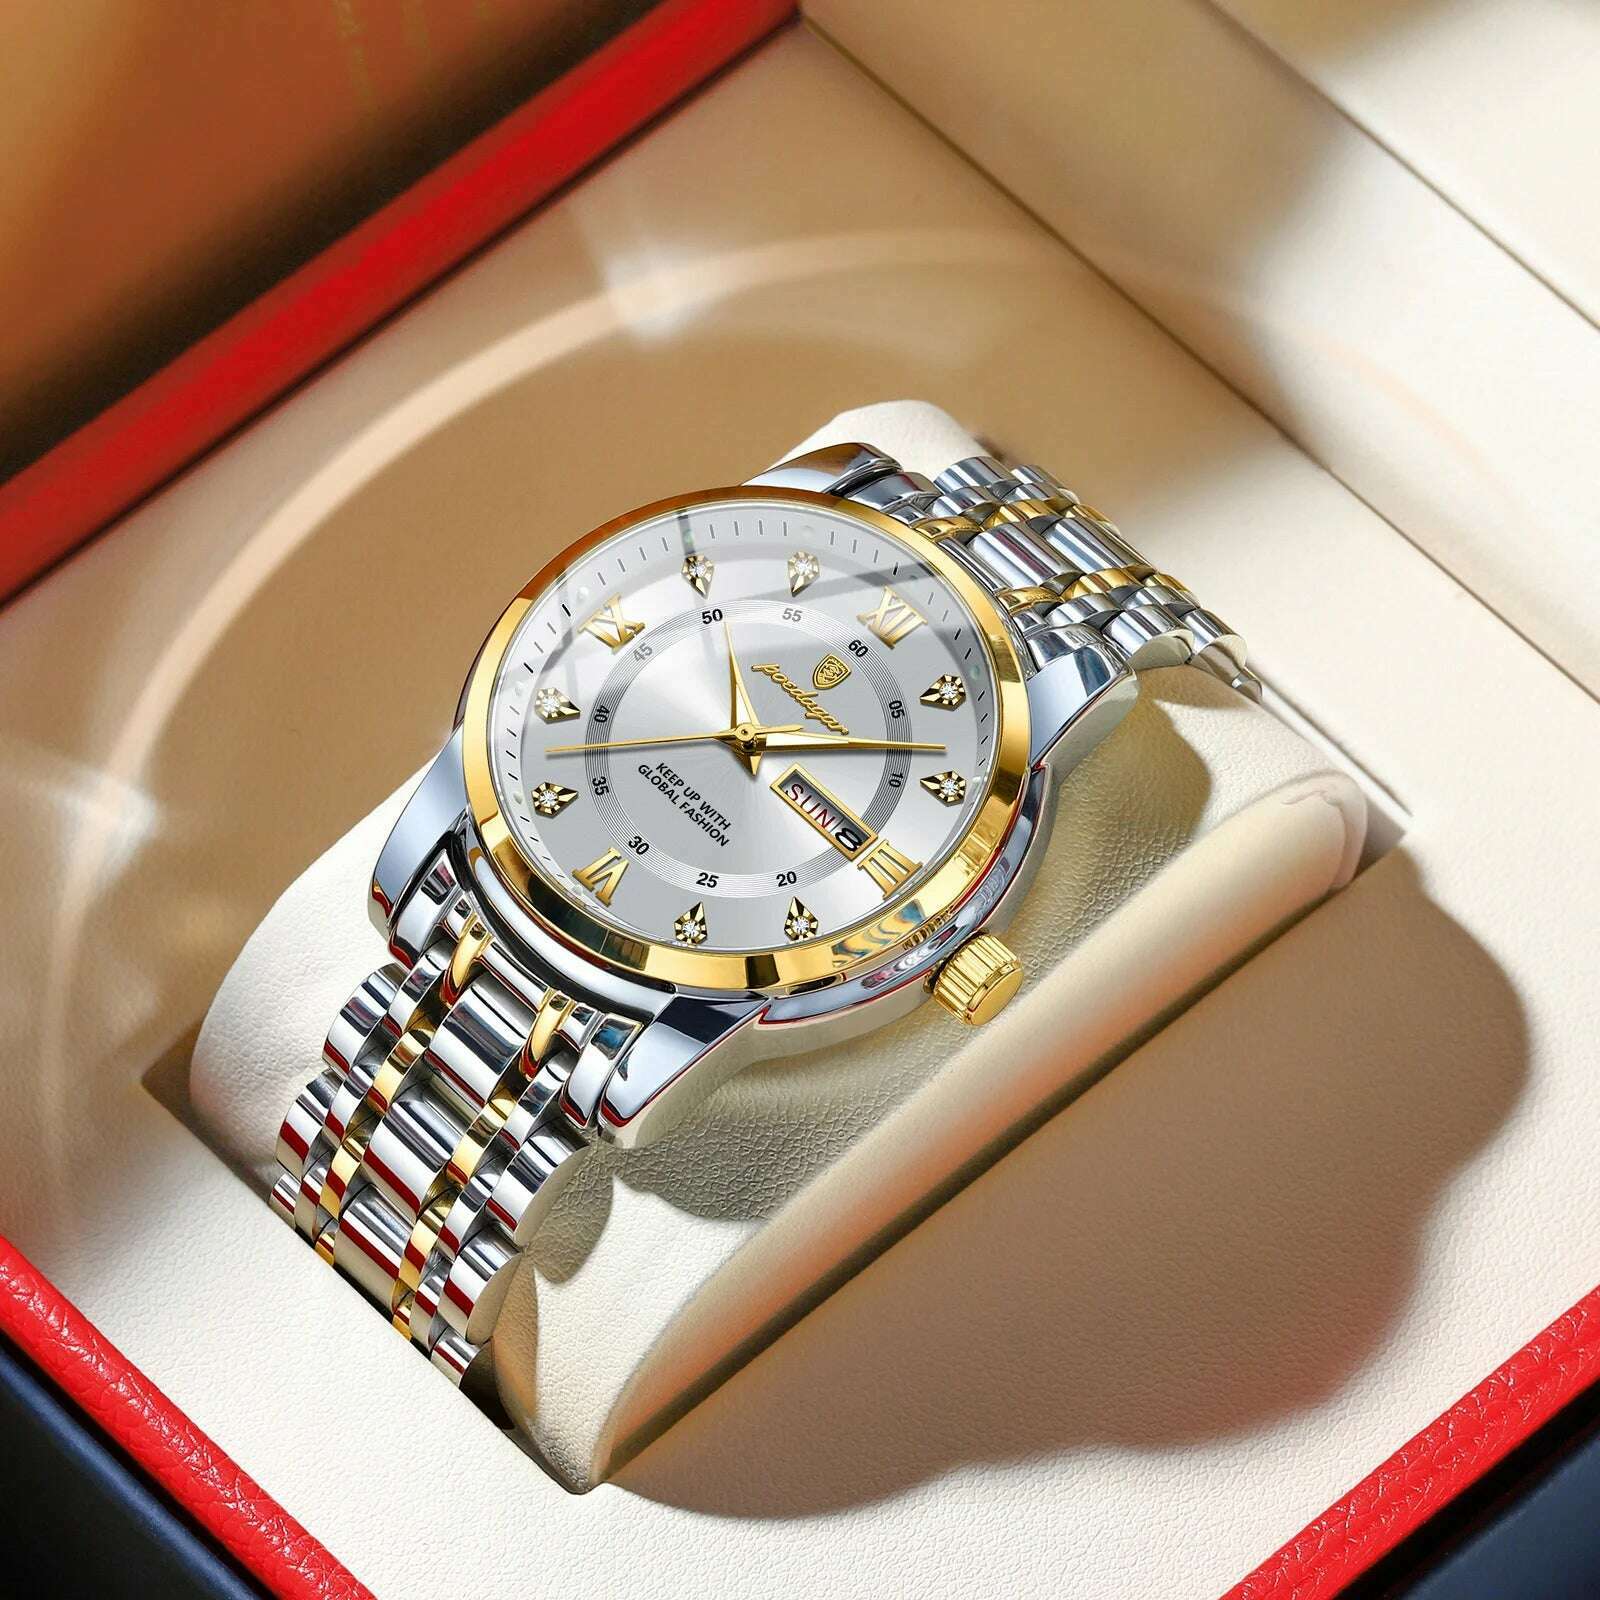 KIMLUD, POEDAGAR Luxury Watch for Man Elegant Date Week Waterproof Luminous Men Watch Quartz Stainless Steel Sports Men's Watches reloj, Gold White, KIMLUD Women's Clothes